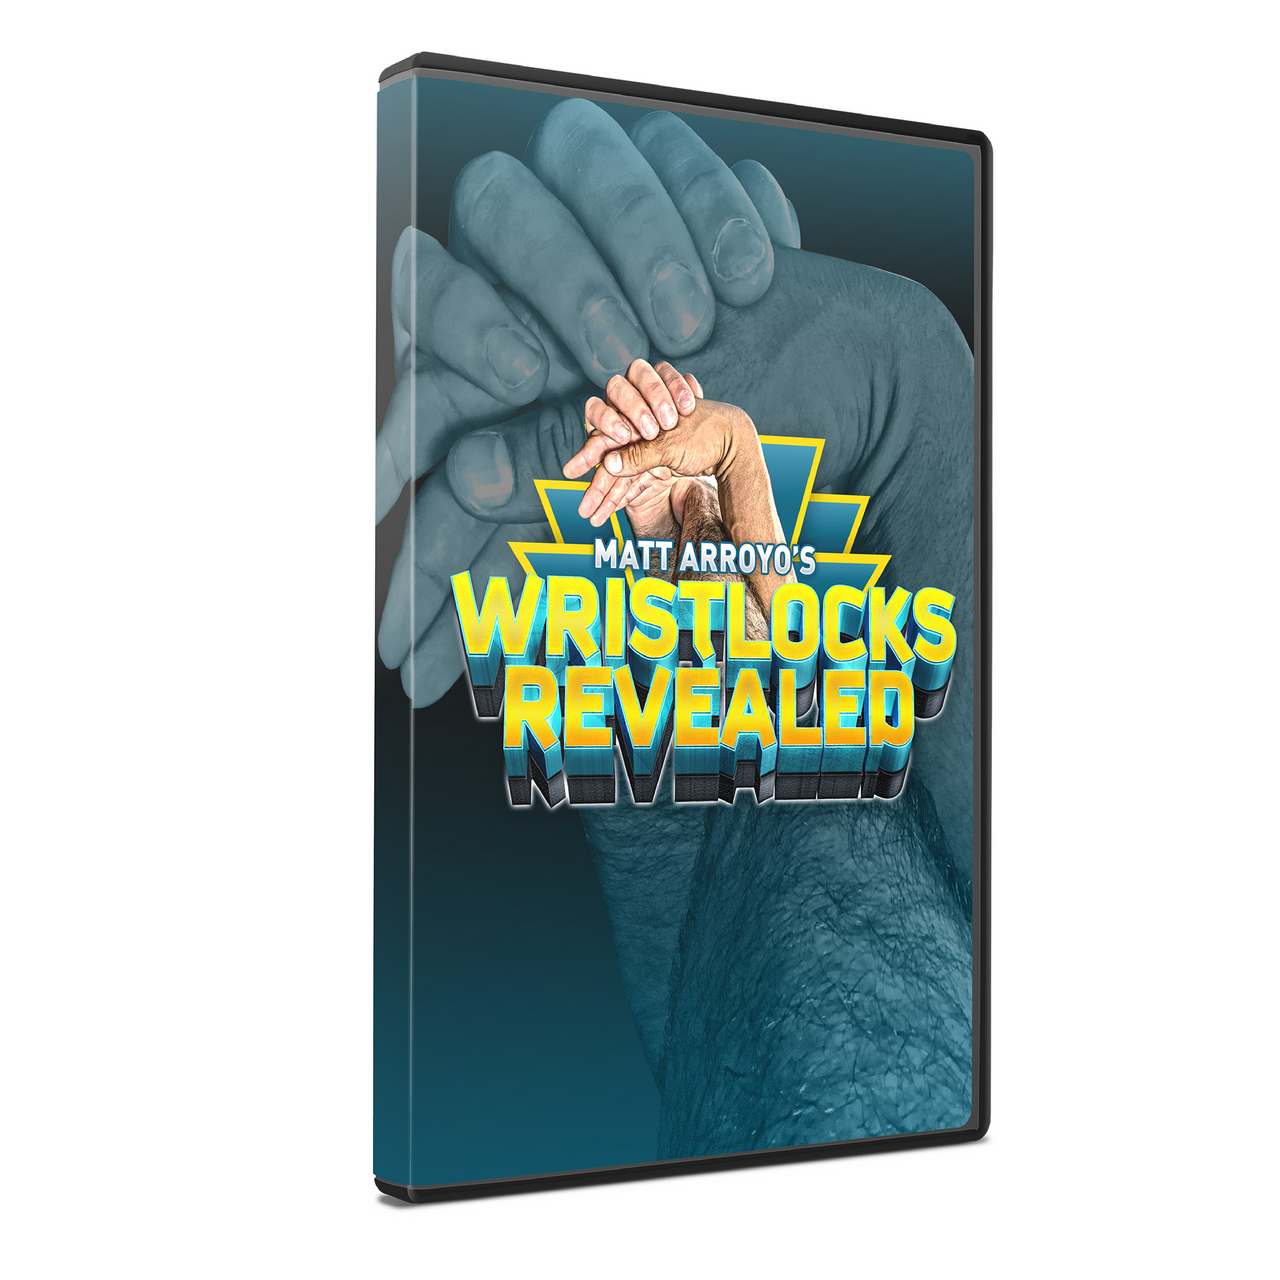 Matt Arroyo’s “Wrist Locks Revealed”